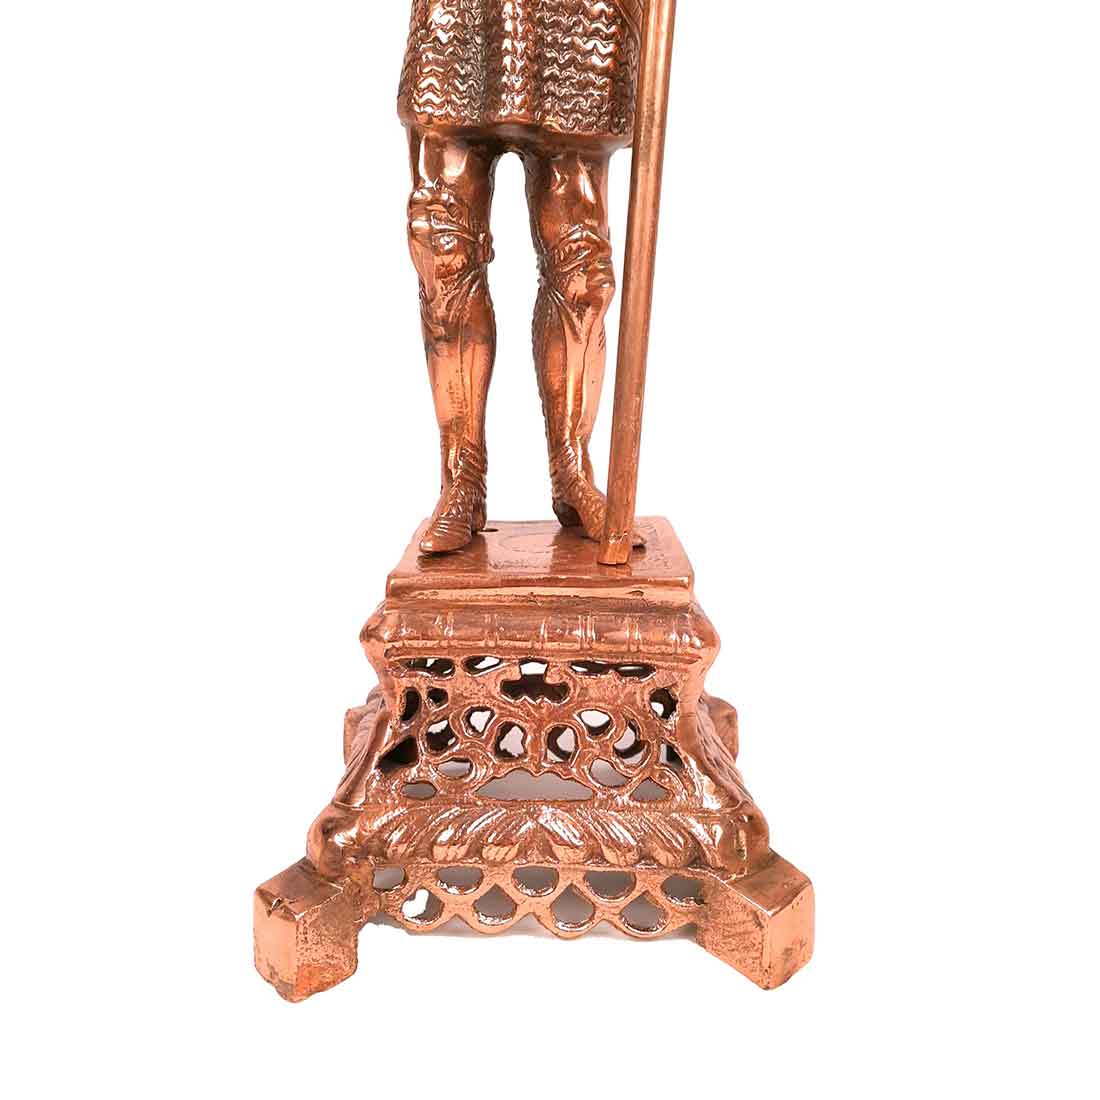 Soldier Figurine | Warrior Statue | Antique Showpieces - For Home, Corner, Living Room, Office, Restaurants Decor - 30 Inch